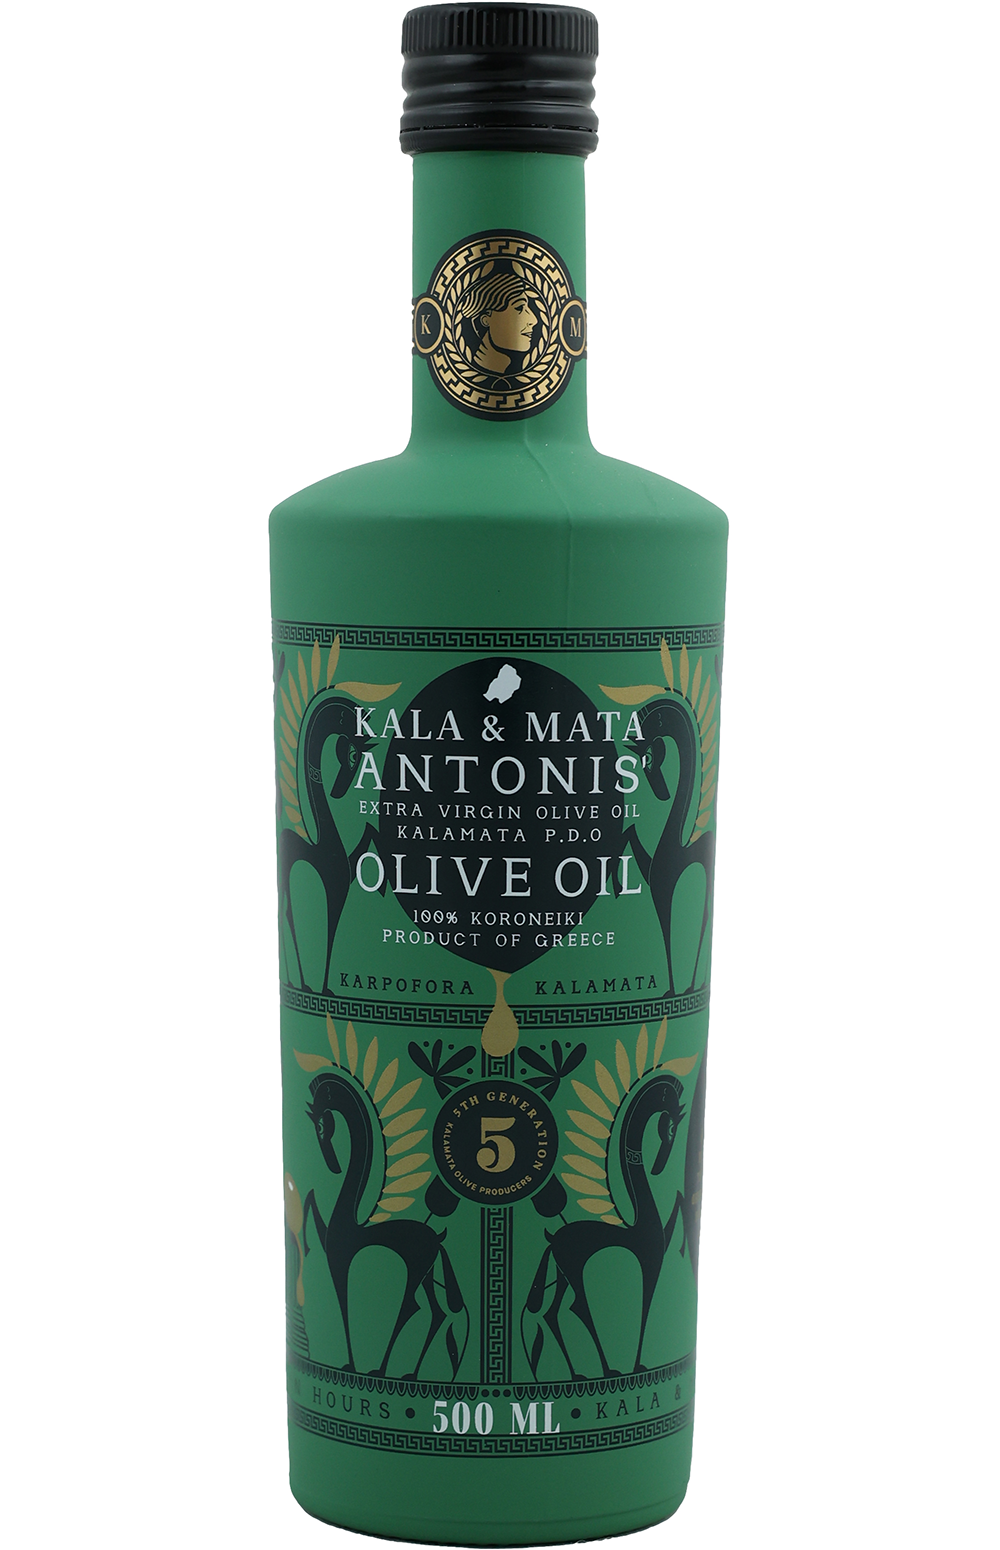 Antonis’ Extra Virgin Olive Oil